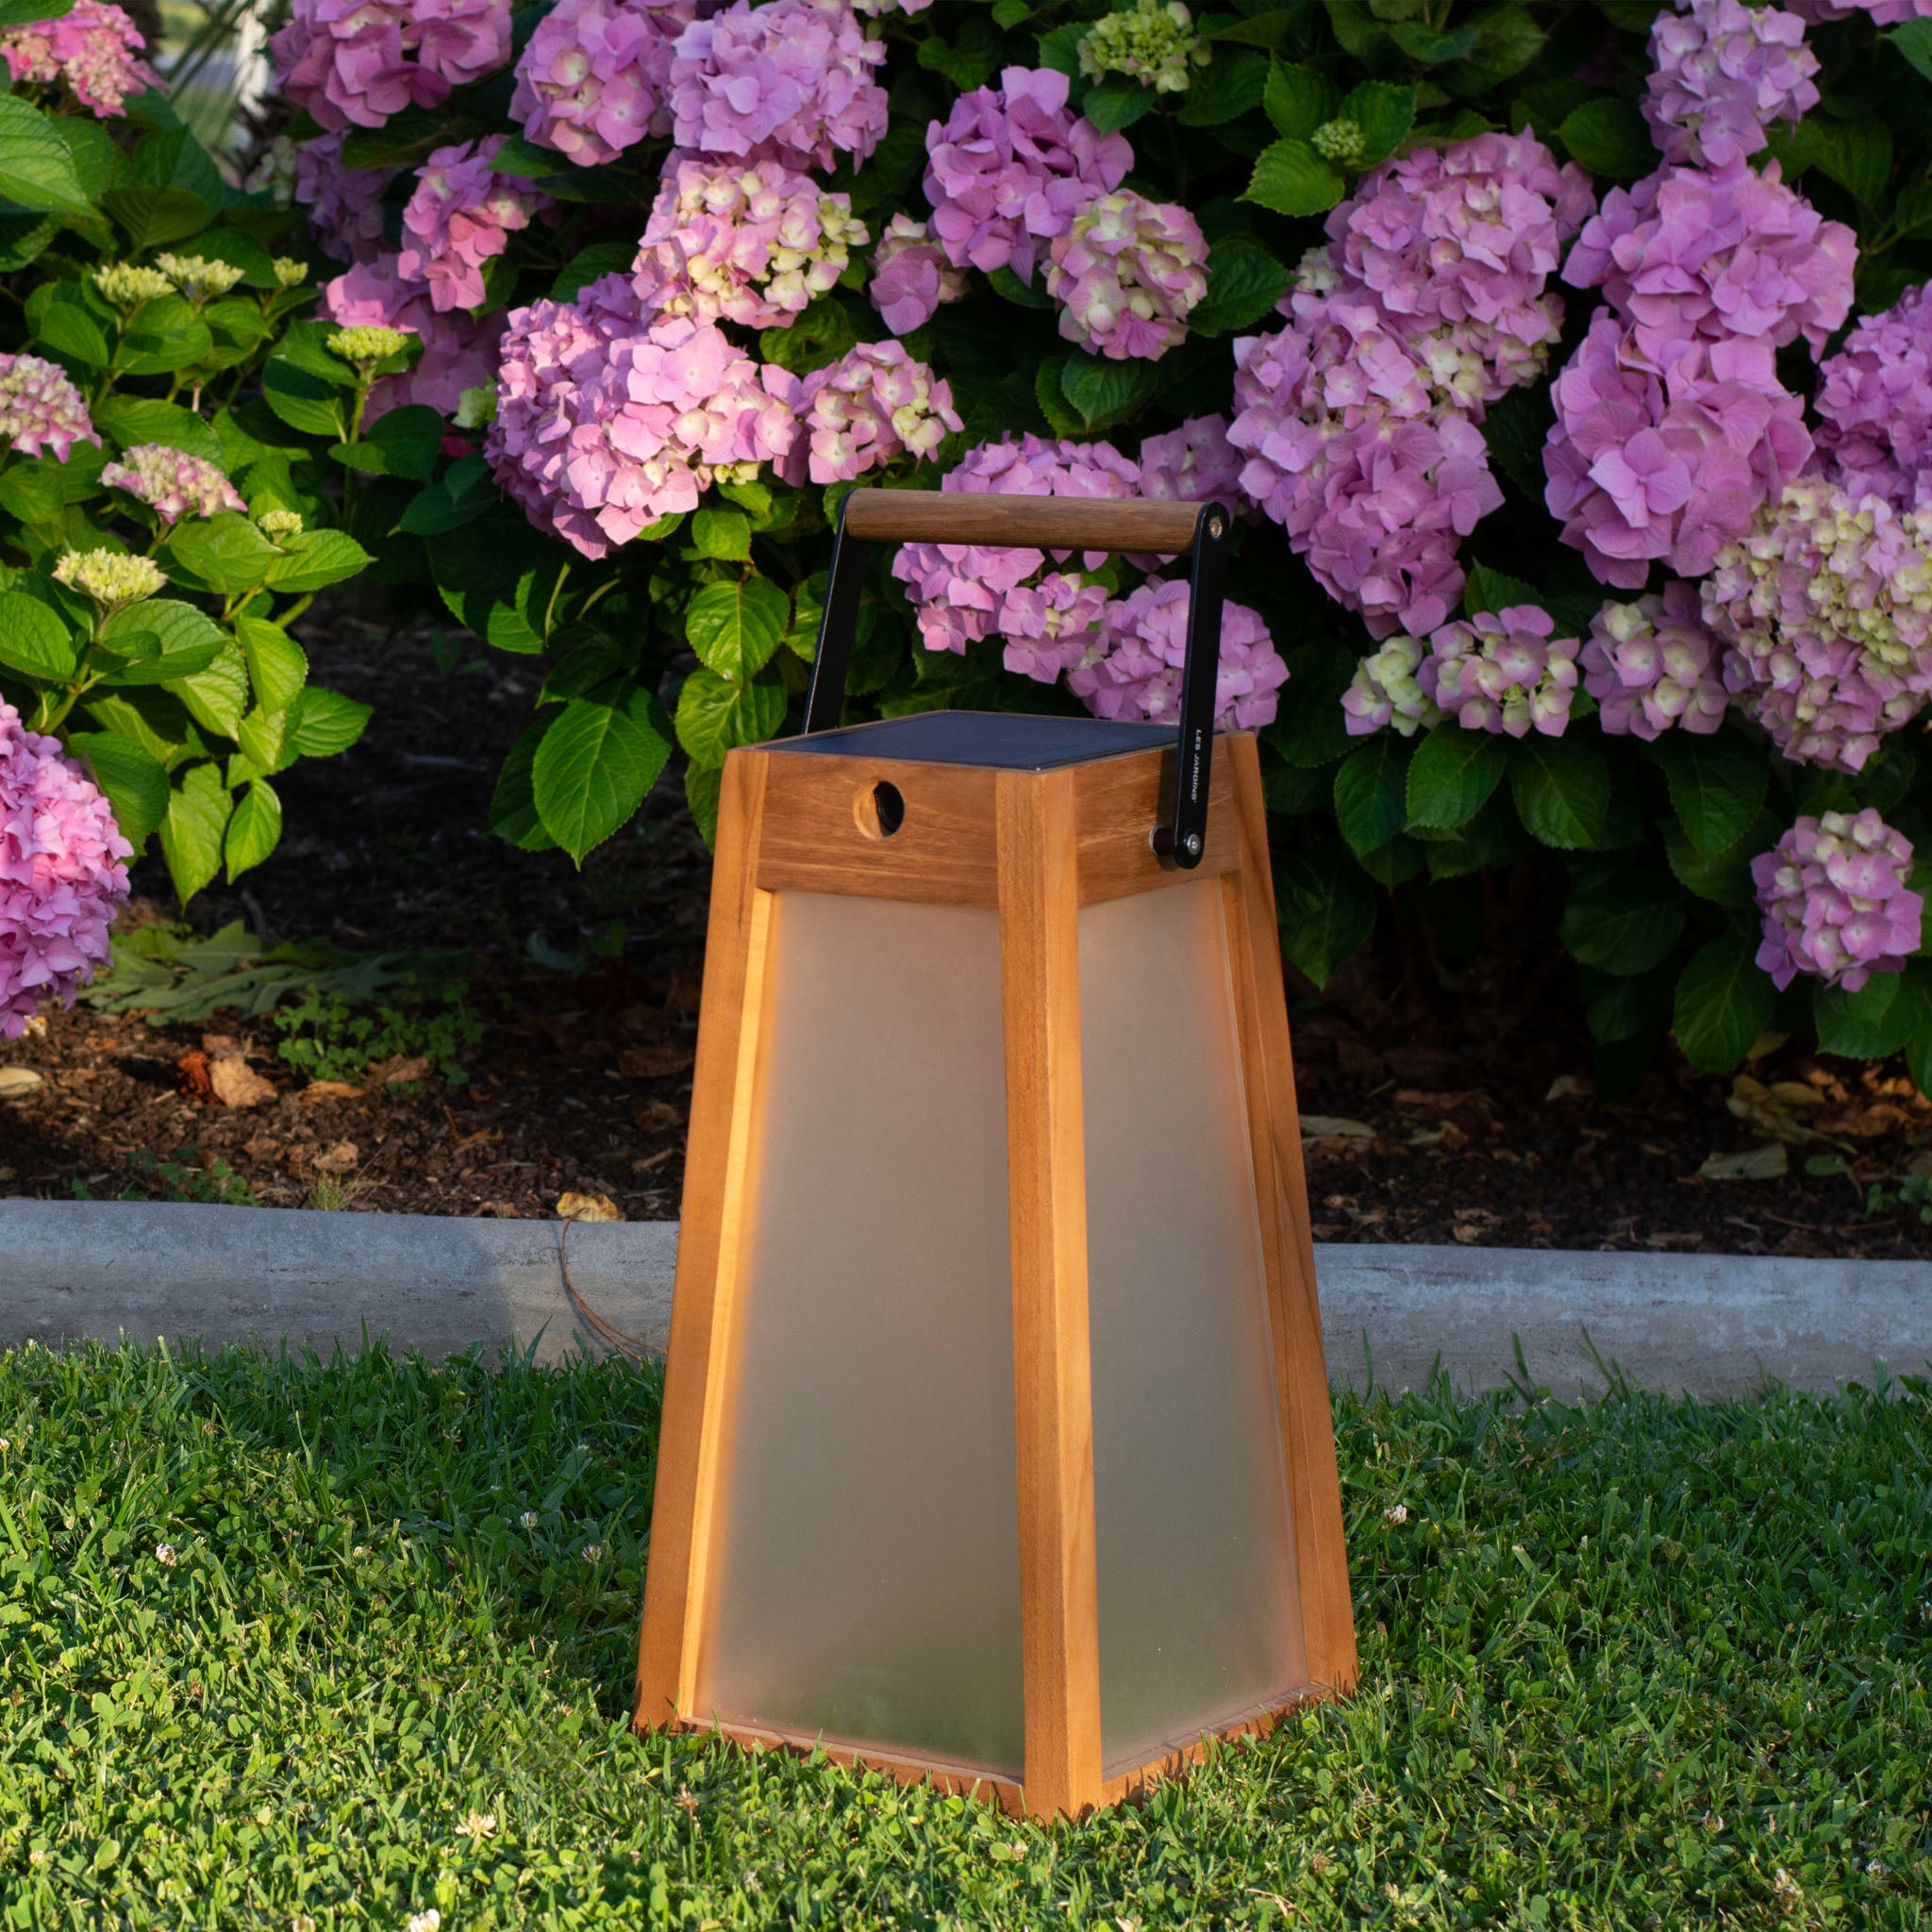 Roam solar lantern outdoor in the garden  with floral